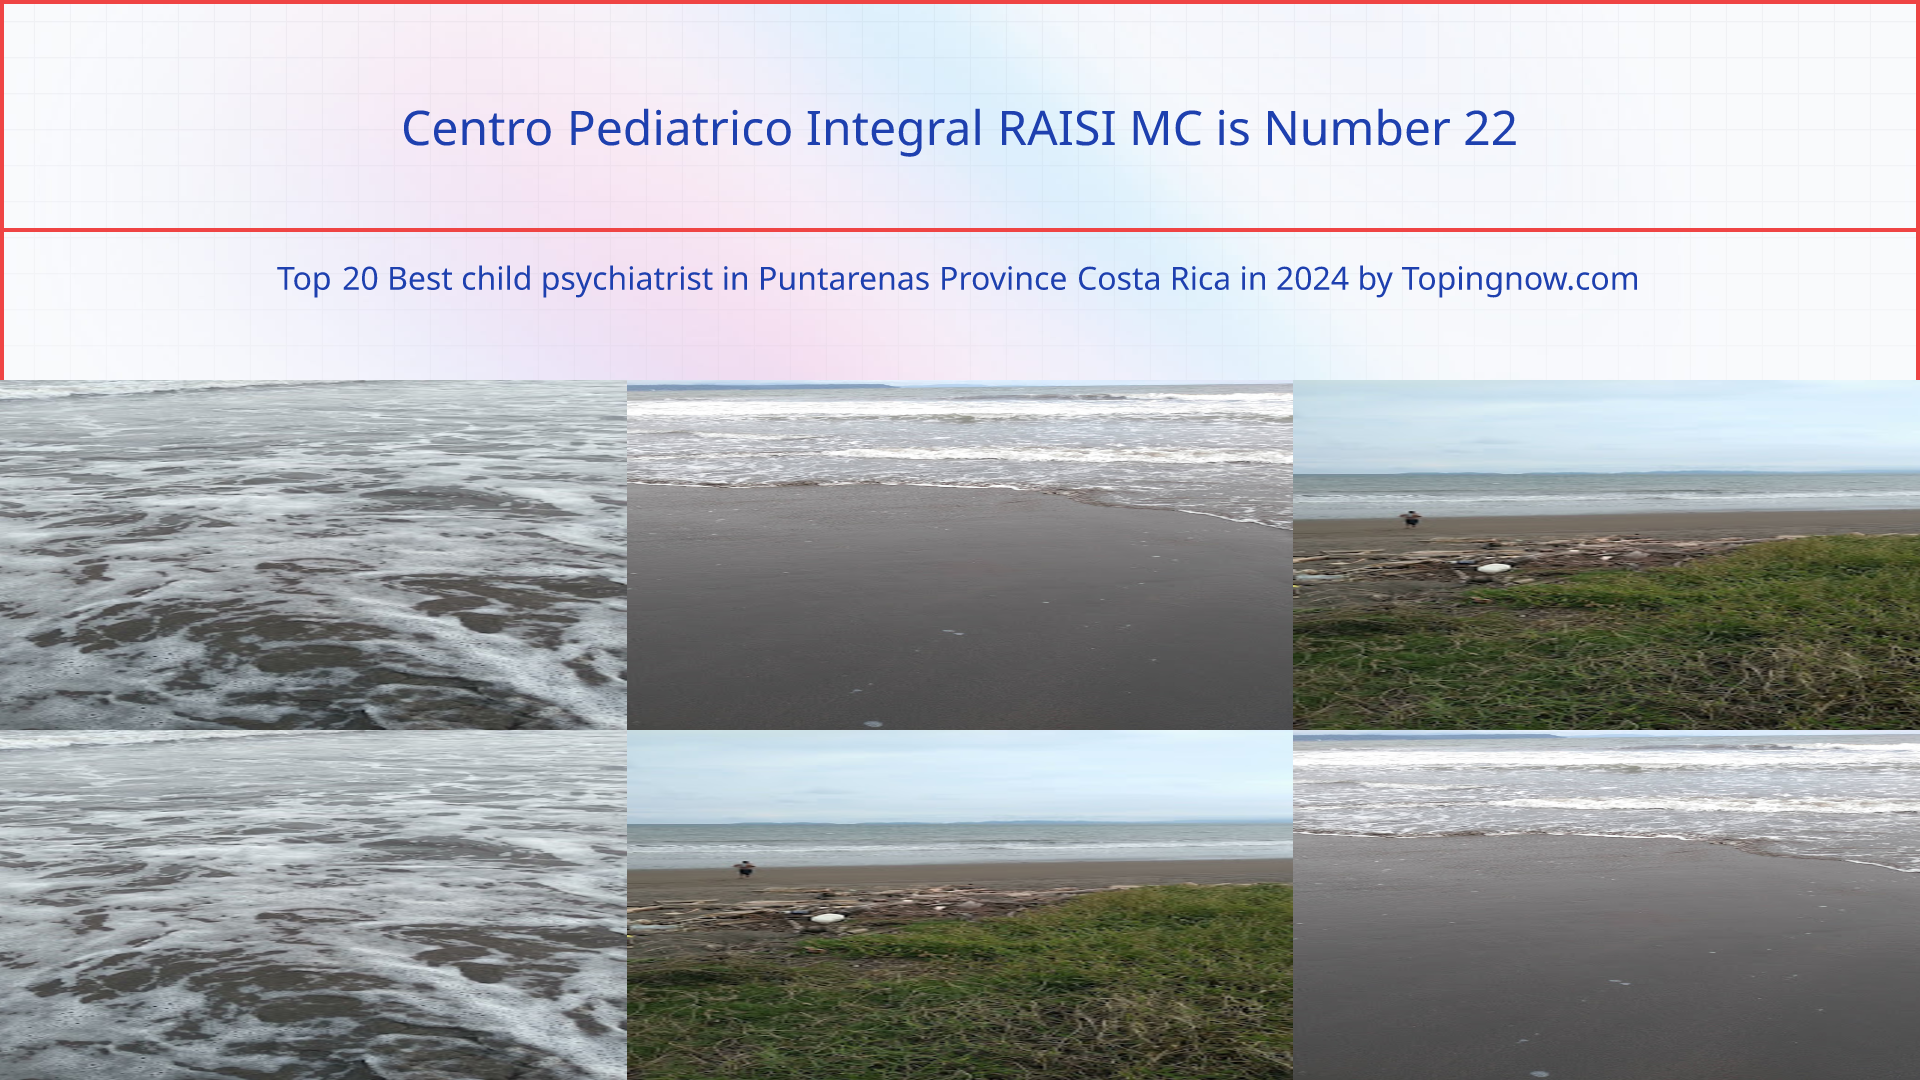 Centro Pediatrico Integral RAISI MC: Top 20 Best child psychiatrist in Puntarenas Province Costa Rica in 2024